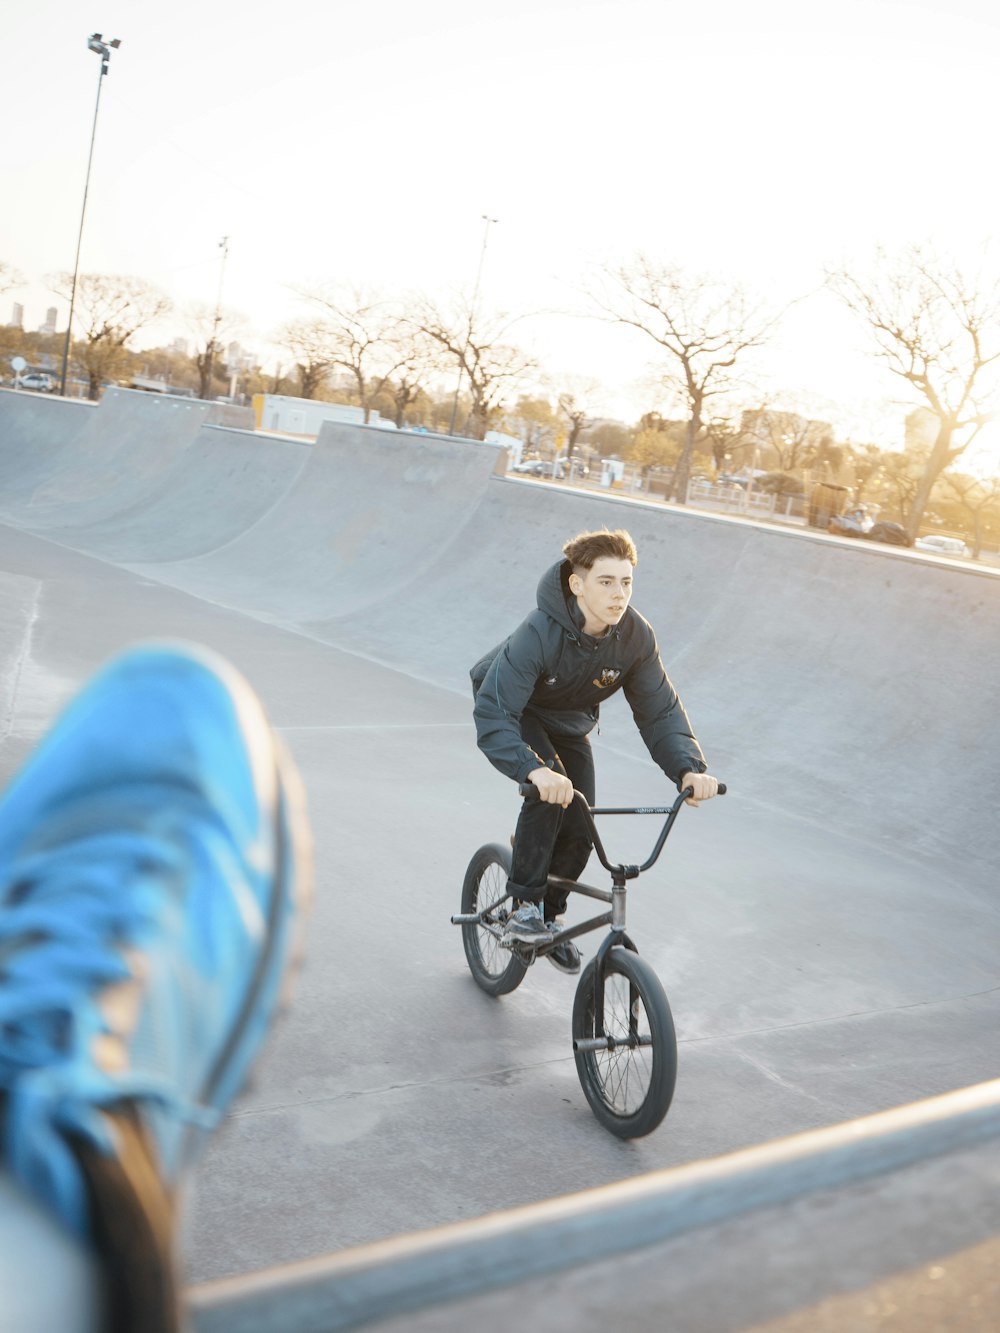 a person riding a bike in a skate park